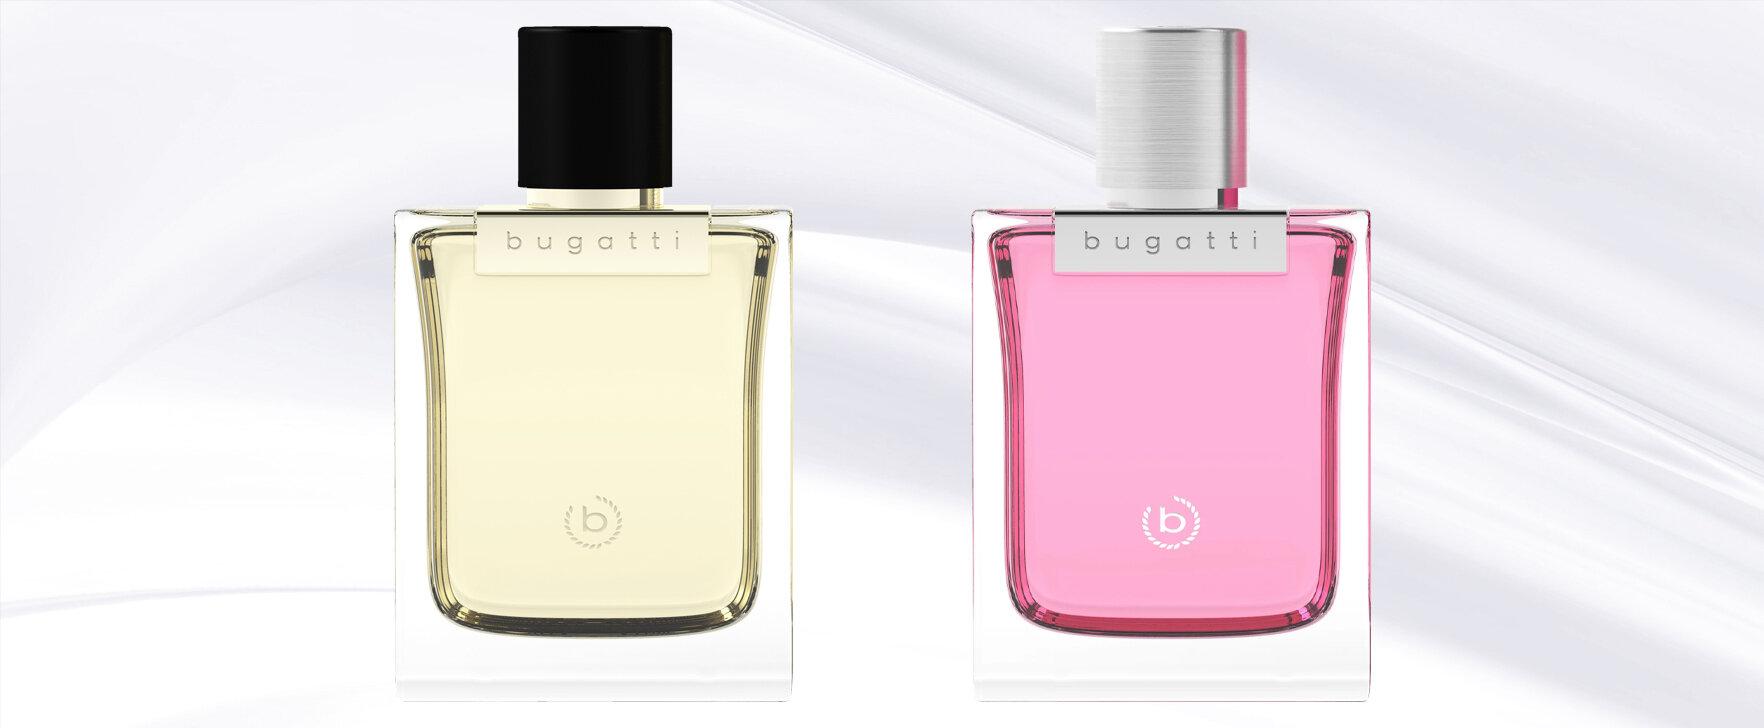 Fruity Fragrance Novelties: "Bella Donna Gold" and "Bella Donna Rosa" From bugatti Fashion